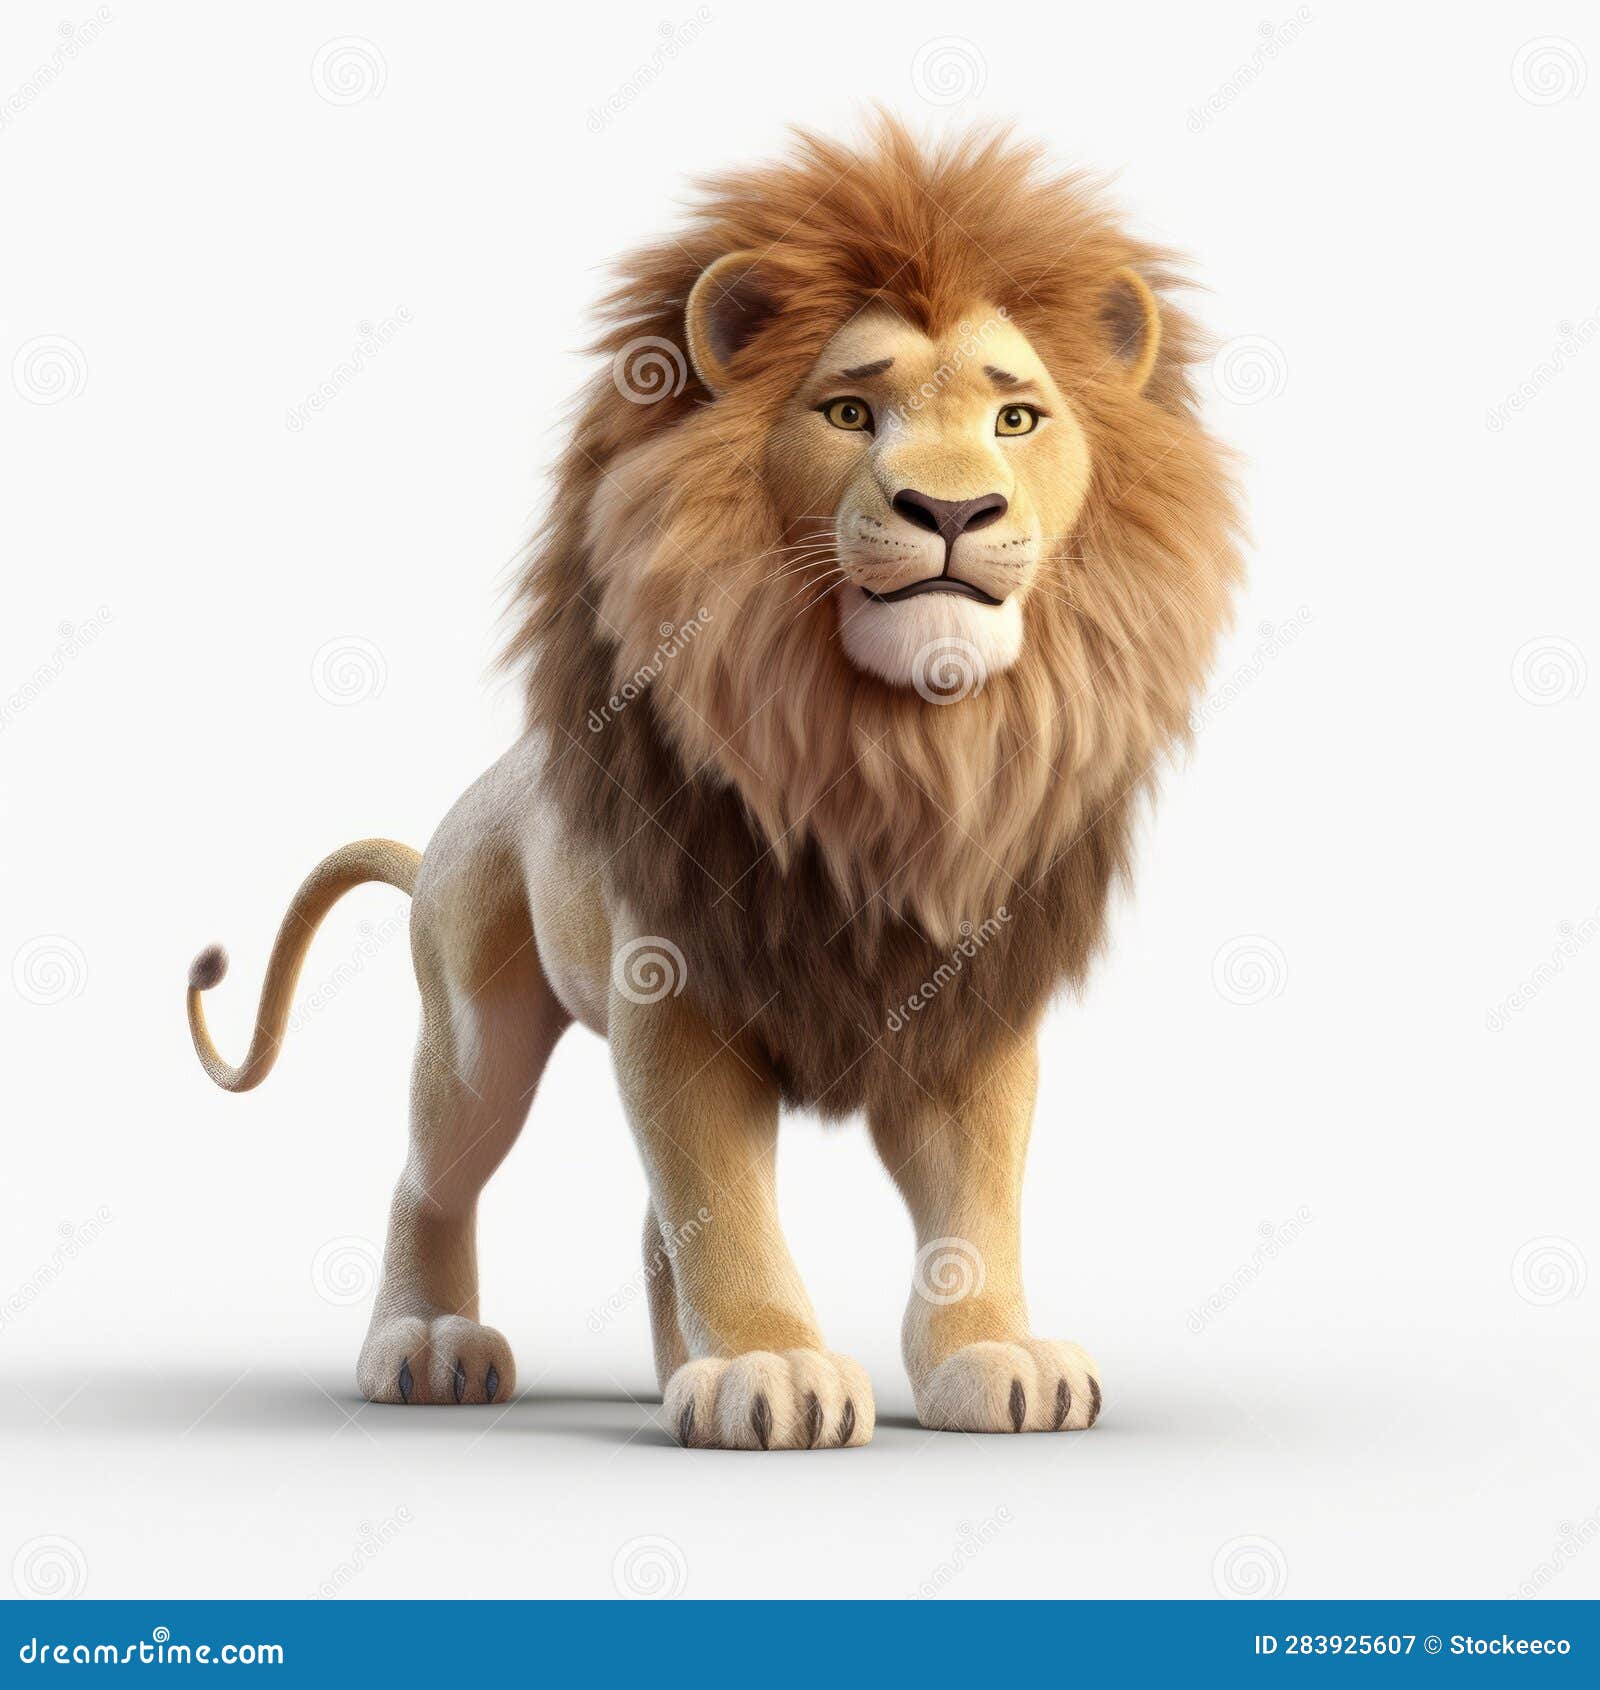 Impressive Pixar-style Animated Lion on White Background Stock ...